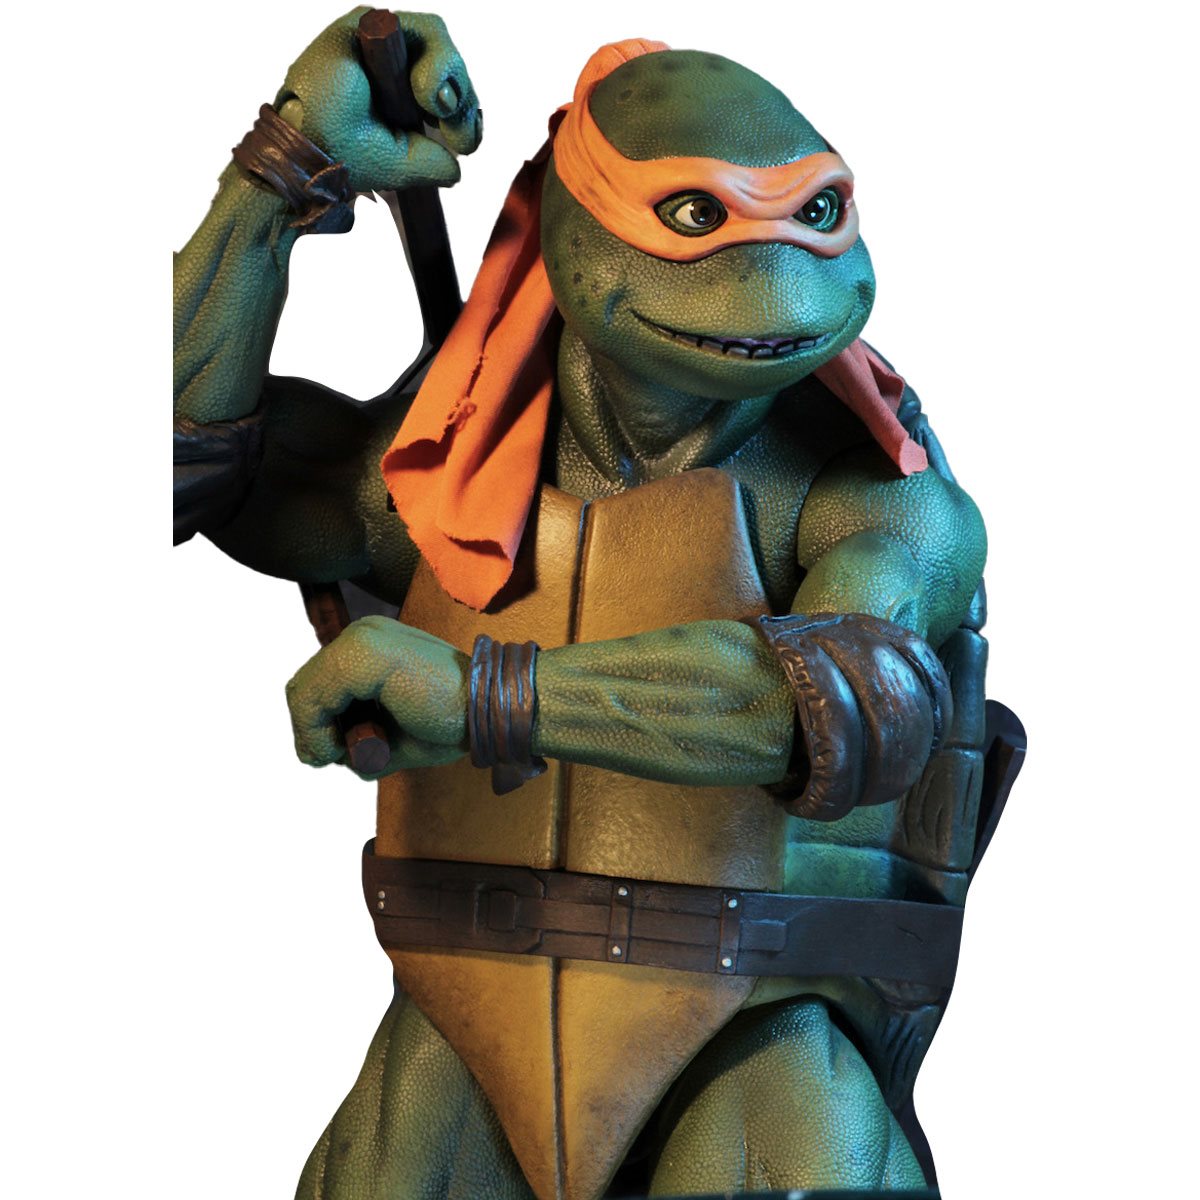 Michaelangelo from Teenage Mutant Ninja Turtles